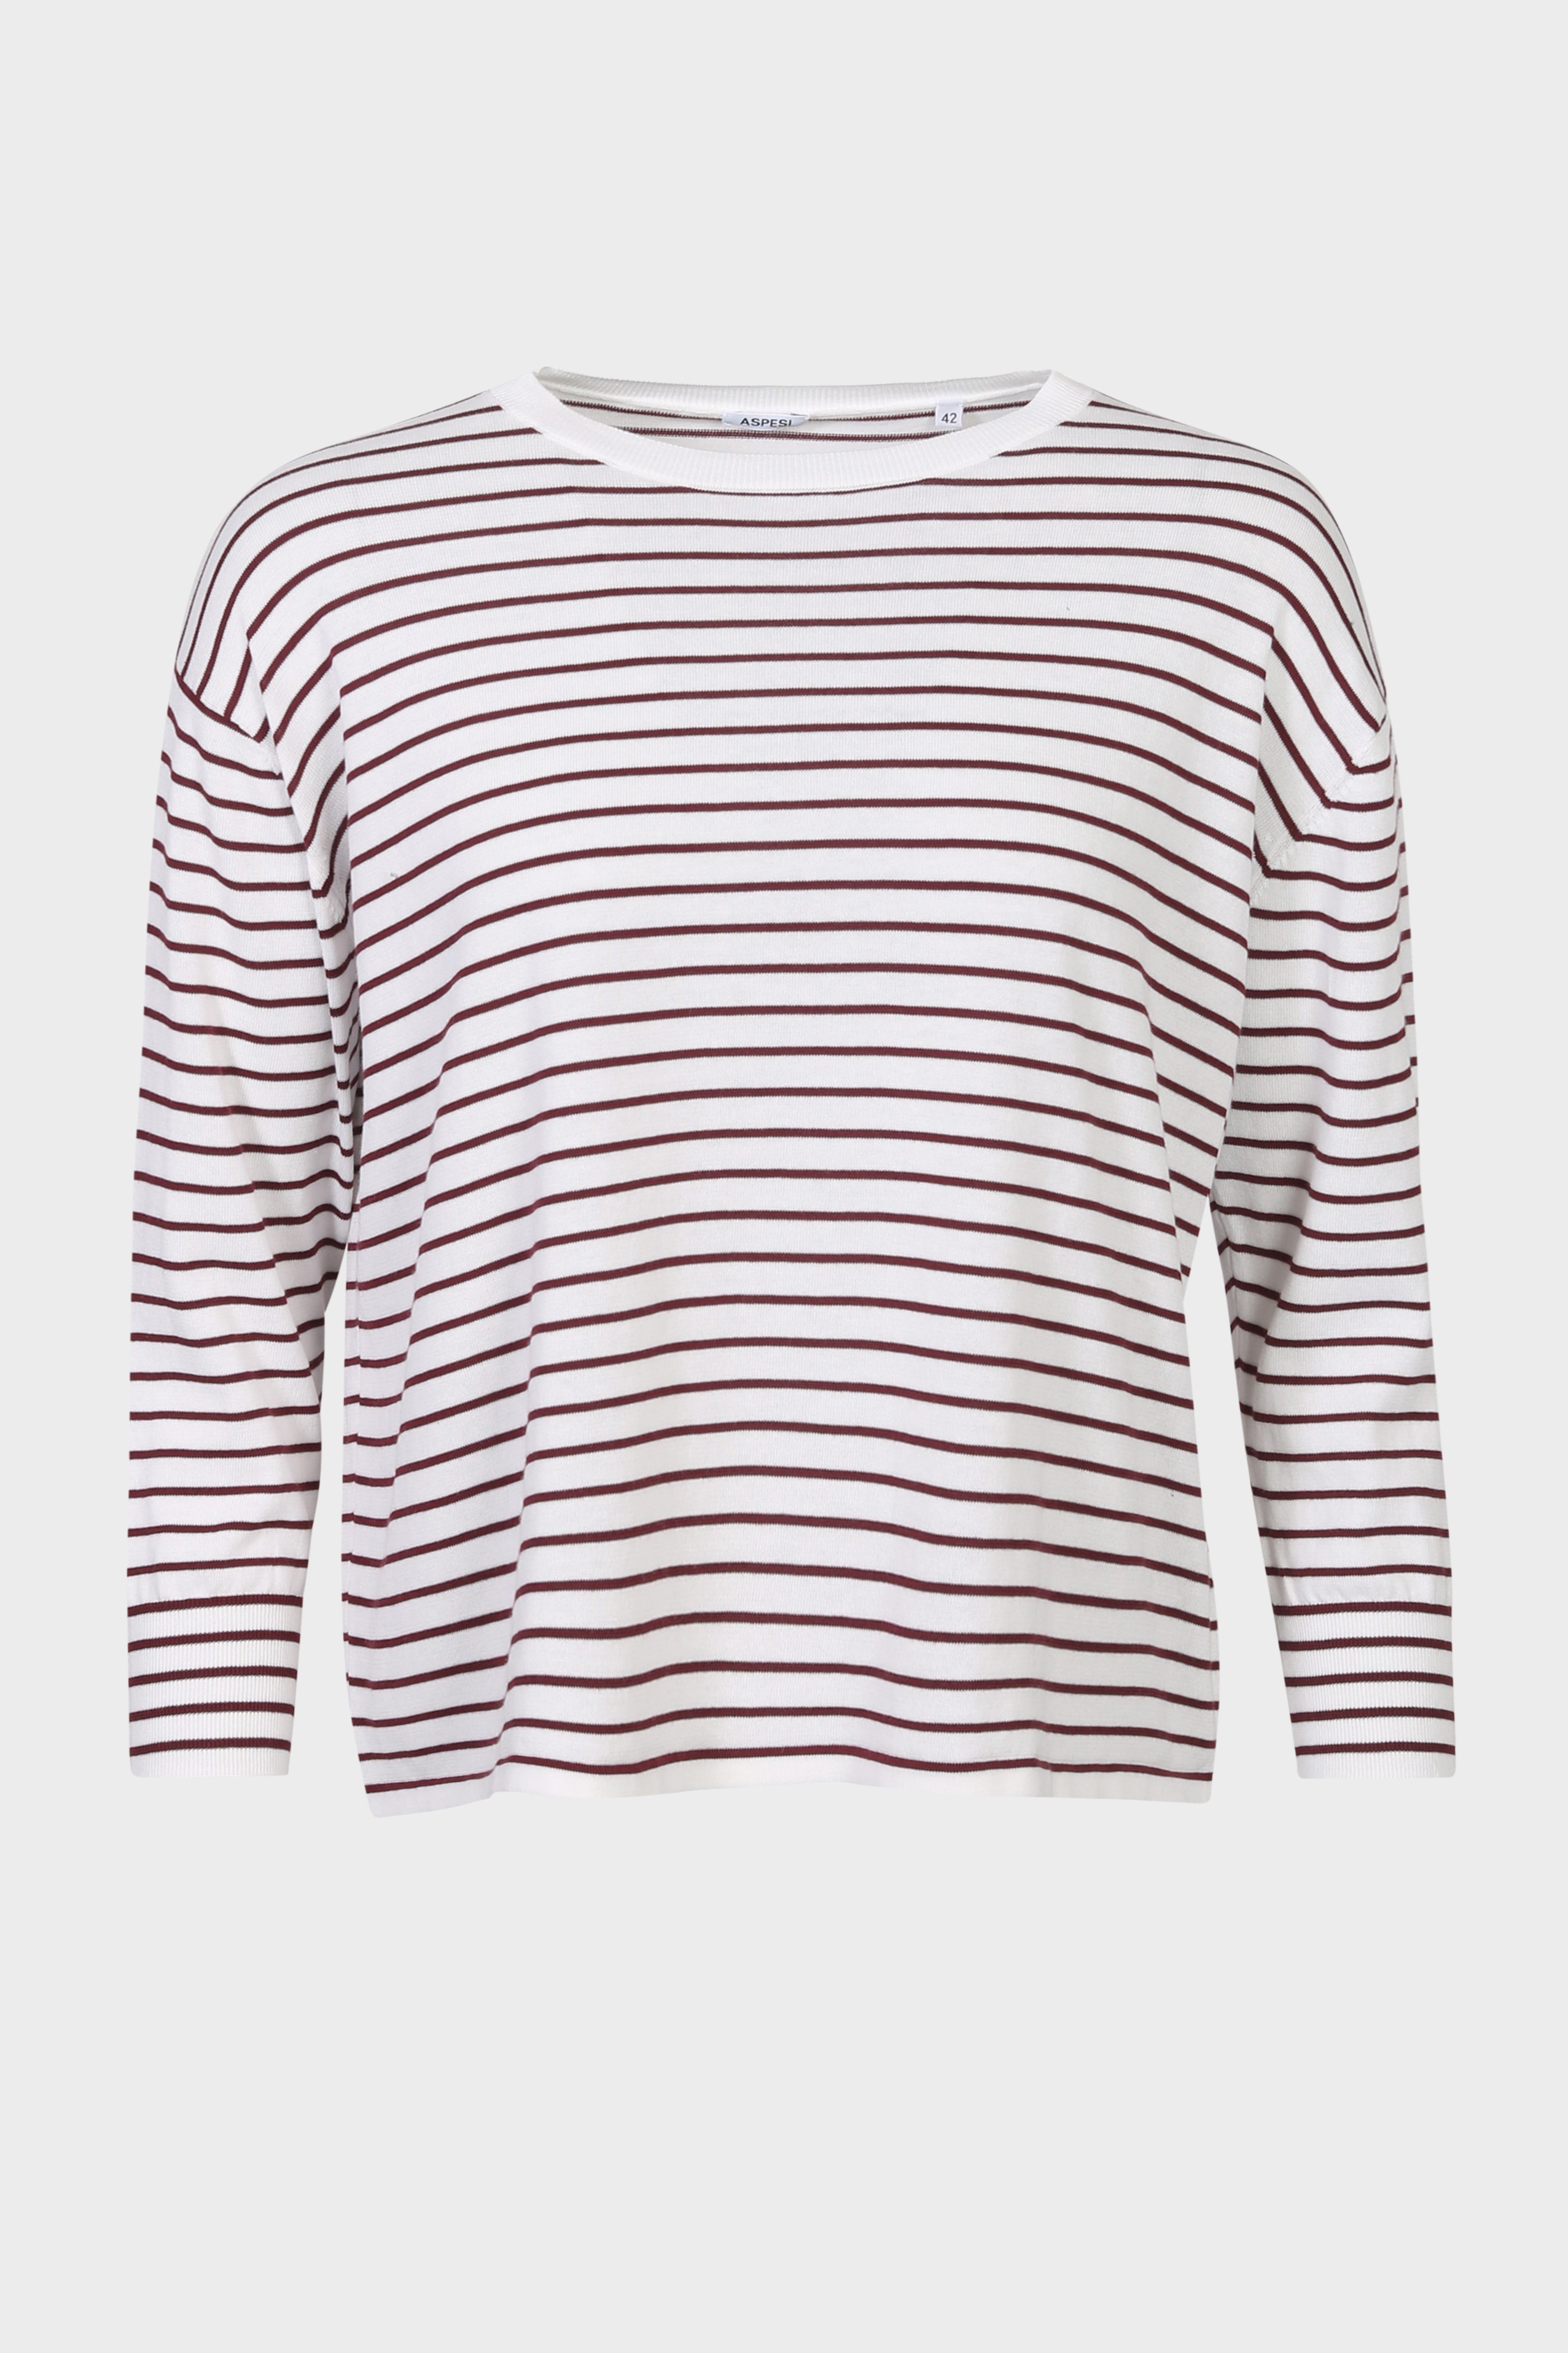 ASPESI Striped Cotton Sweater White/Bordeaux IT40 / DE34